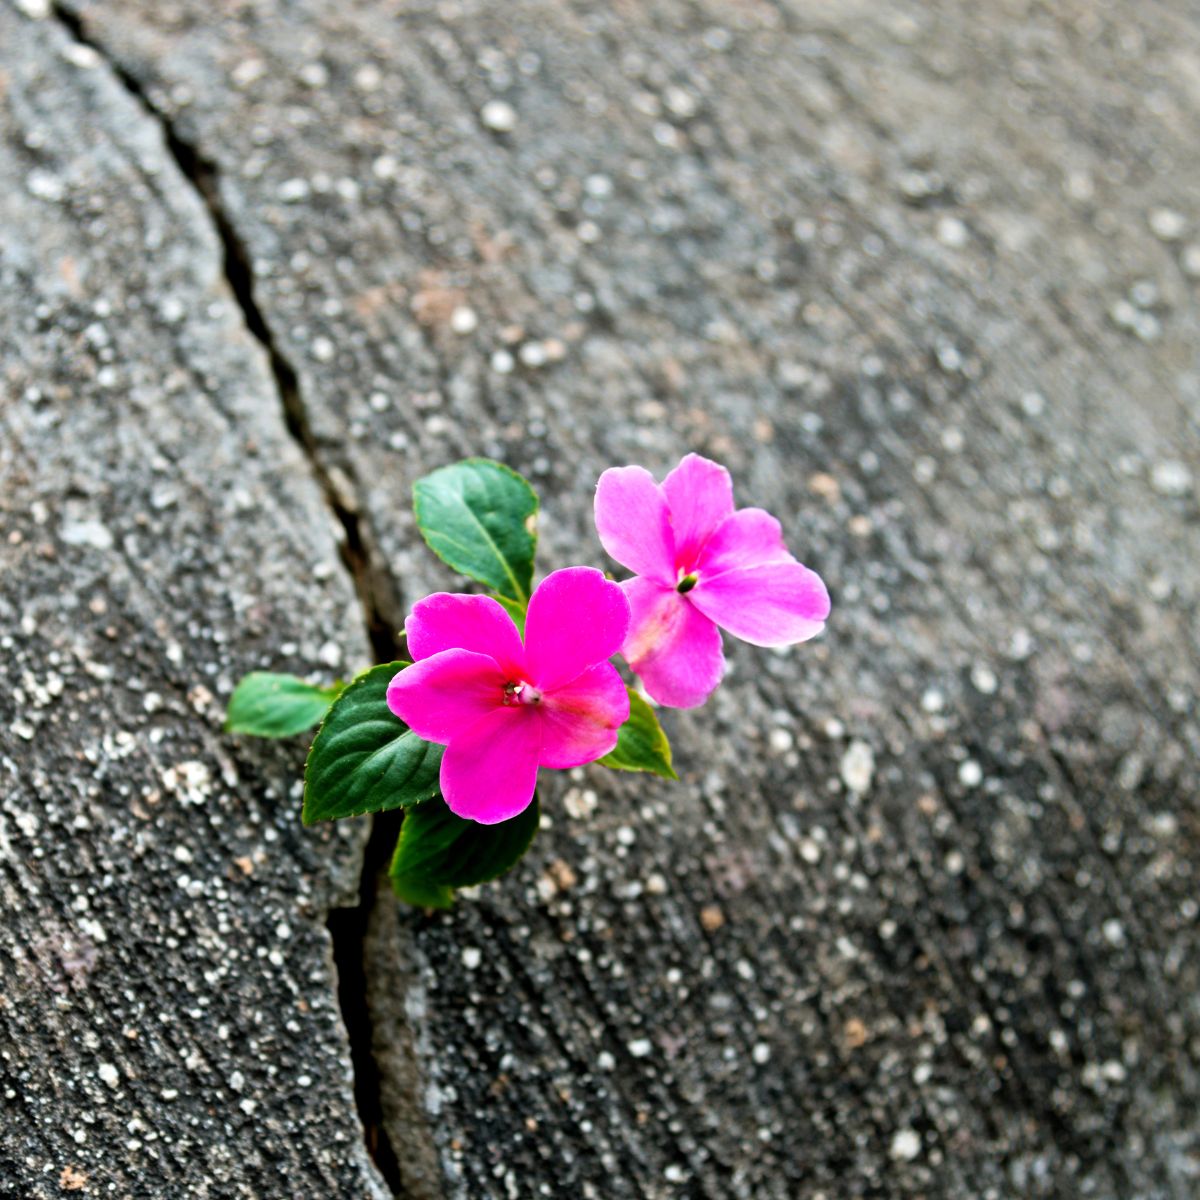 bright pink flowers growing in an asphalt crack